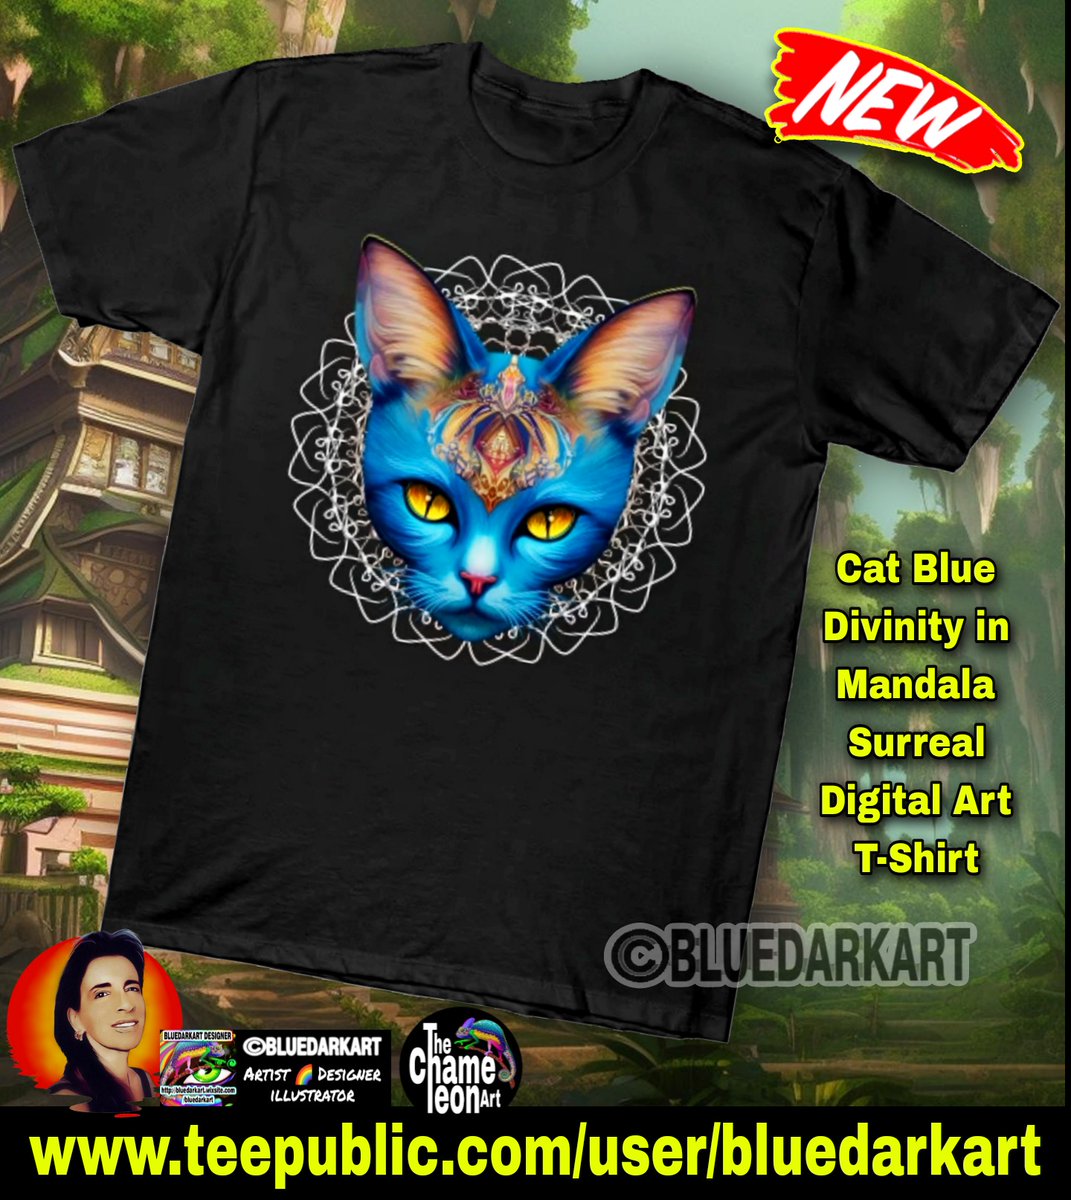 #NEW! 🐈 #Cat #Blue #Divinity in #Mandala #Surreal #Digital #Art #TShirt 🐈 #design ©️ #BluedarkArt #TheChameleonArt 👉🏾 teepublic.com/t-shirt/408758…
▪︎
🔥 My #shop 👉🏾 teepublic.com/user/bluedarka…
•
#trending #giftideas #catlovers #king #animals #fantasyanimals #shopping #gifts #tiktok